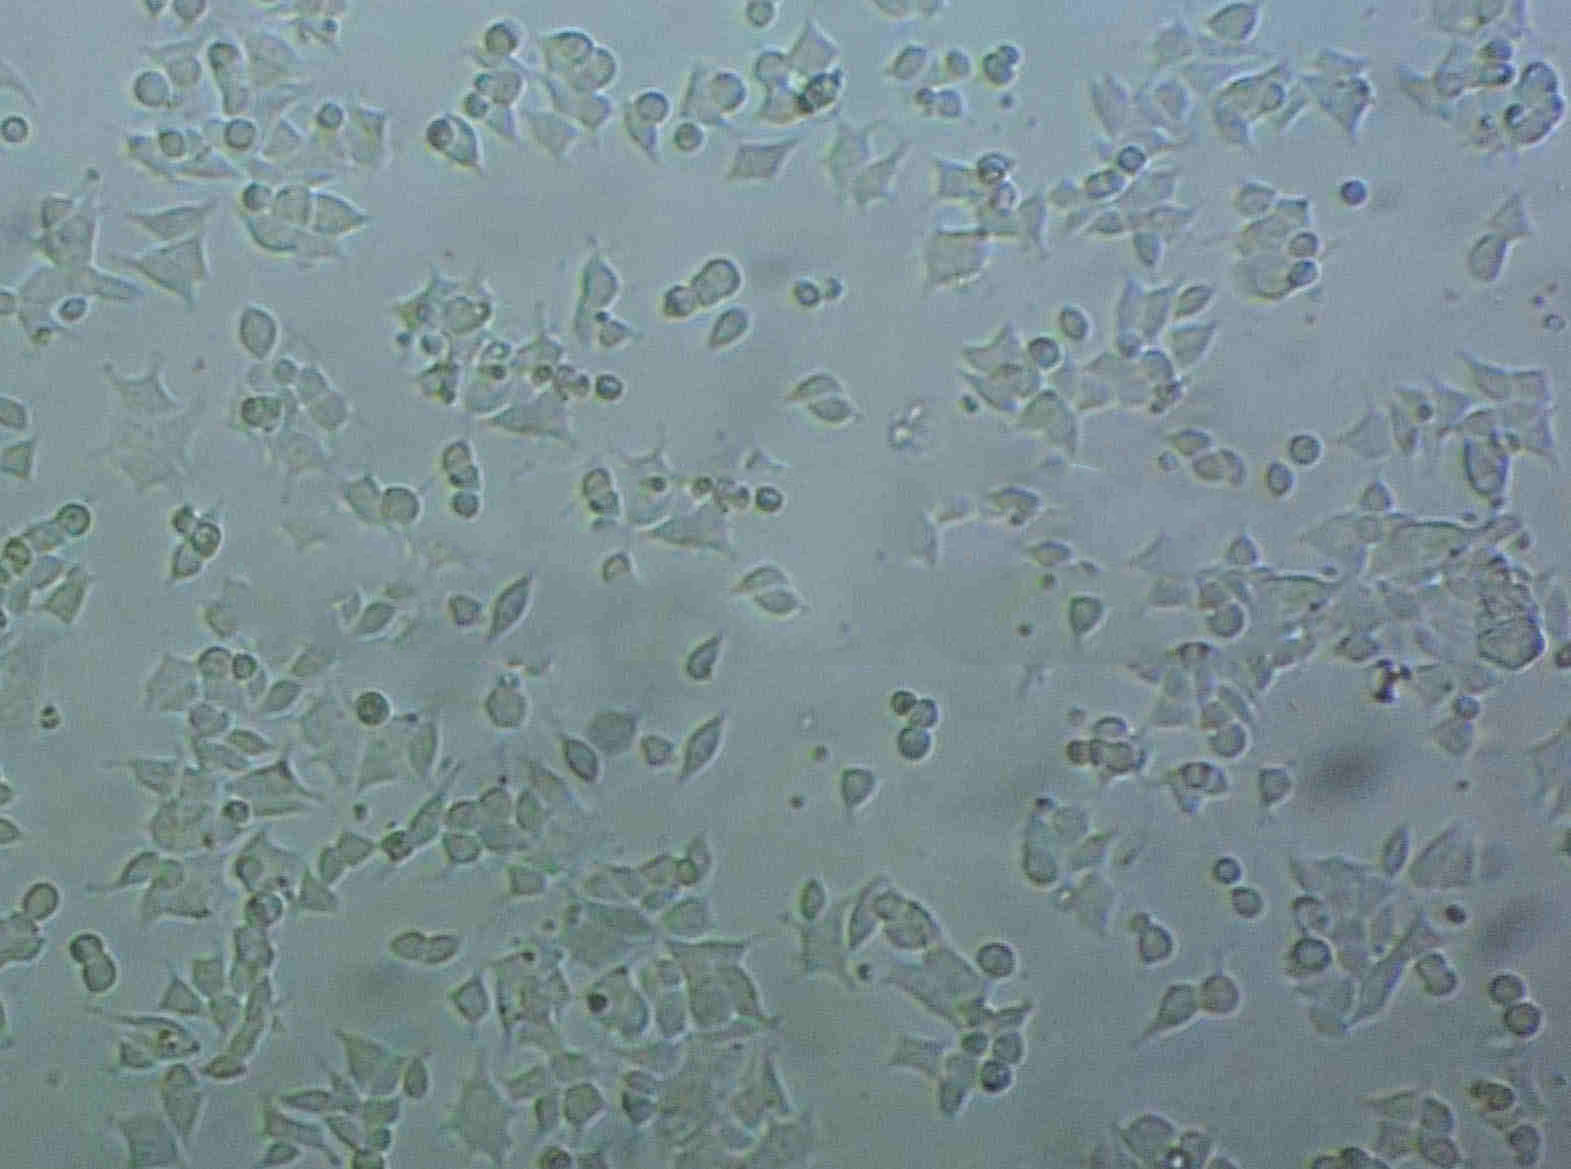 MLTC-1 Cell|小鼠睾丸间质细胞瘤细胞,MLTC-1 Cell